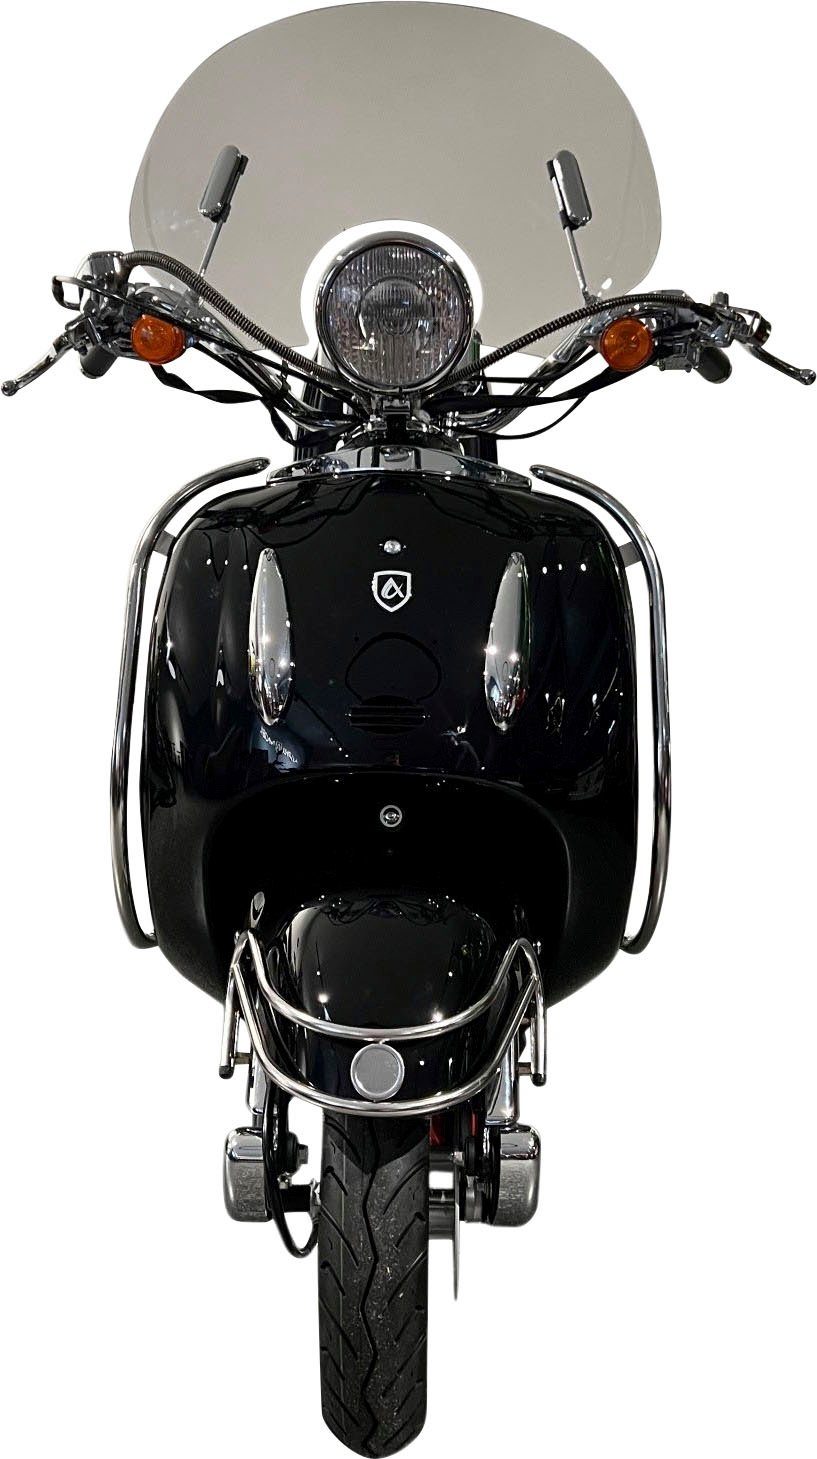 Alpha Motors Motorroller Retro 125 5, ccm, Firenze km/h, Euro Limited, (Spar-Set) schwarz 85